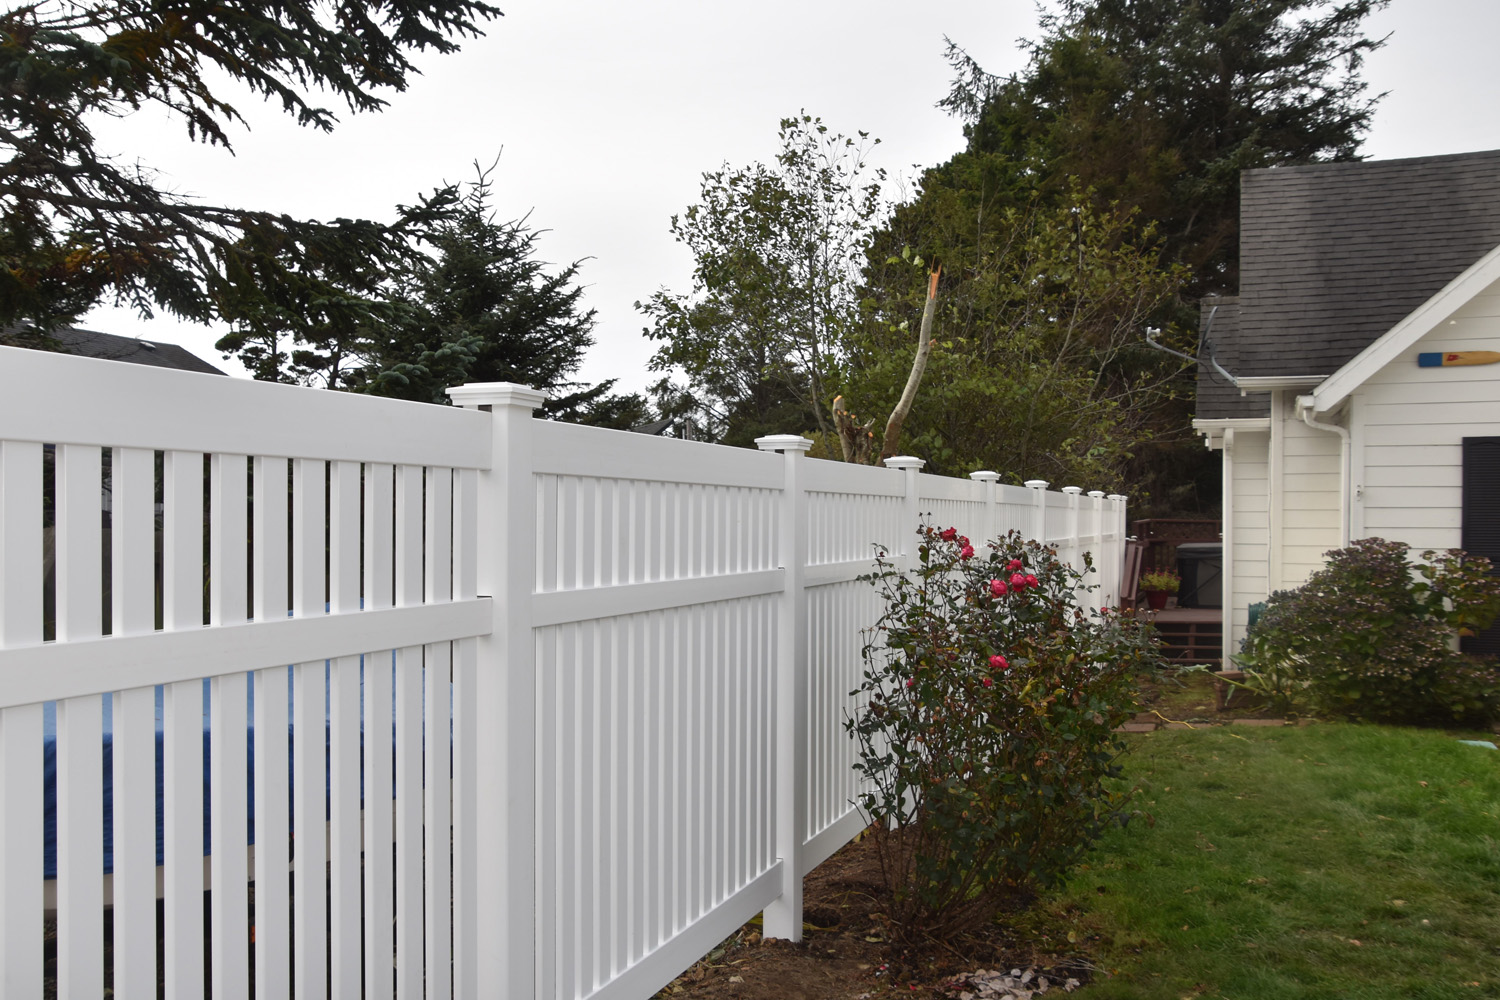 Fence Contractor Salem Oregon